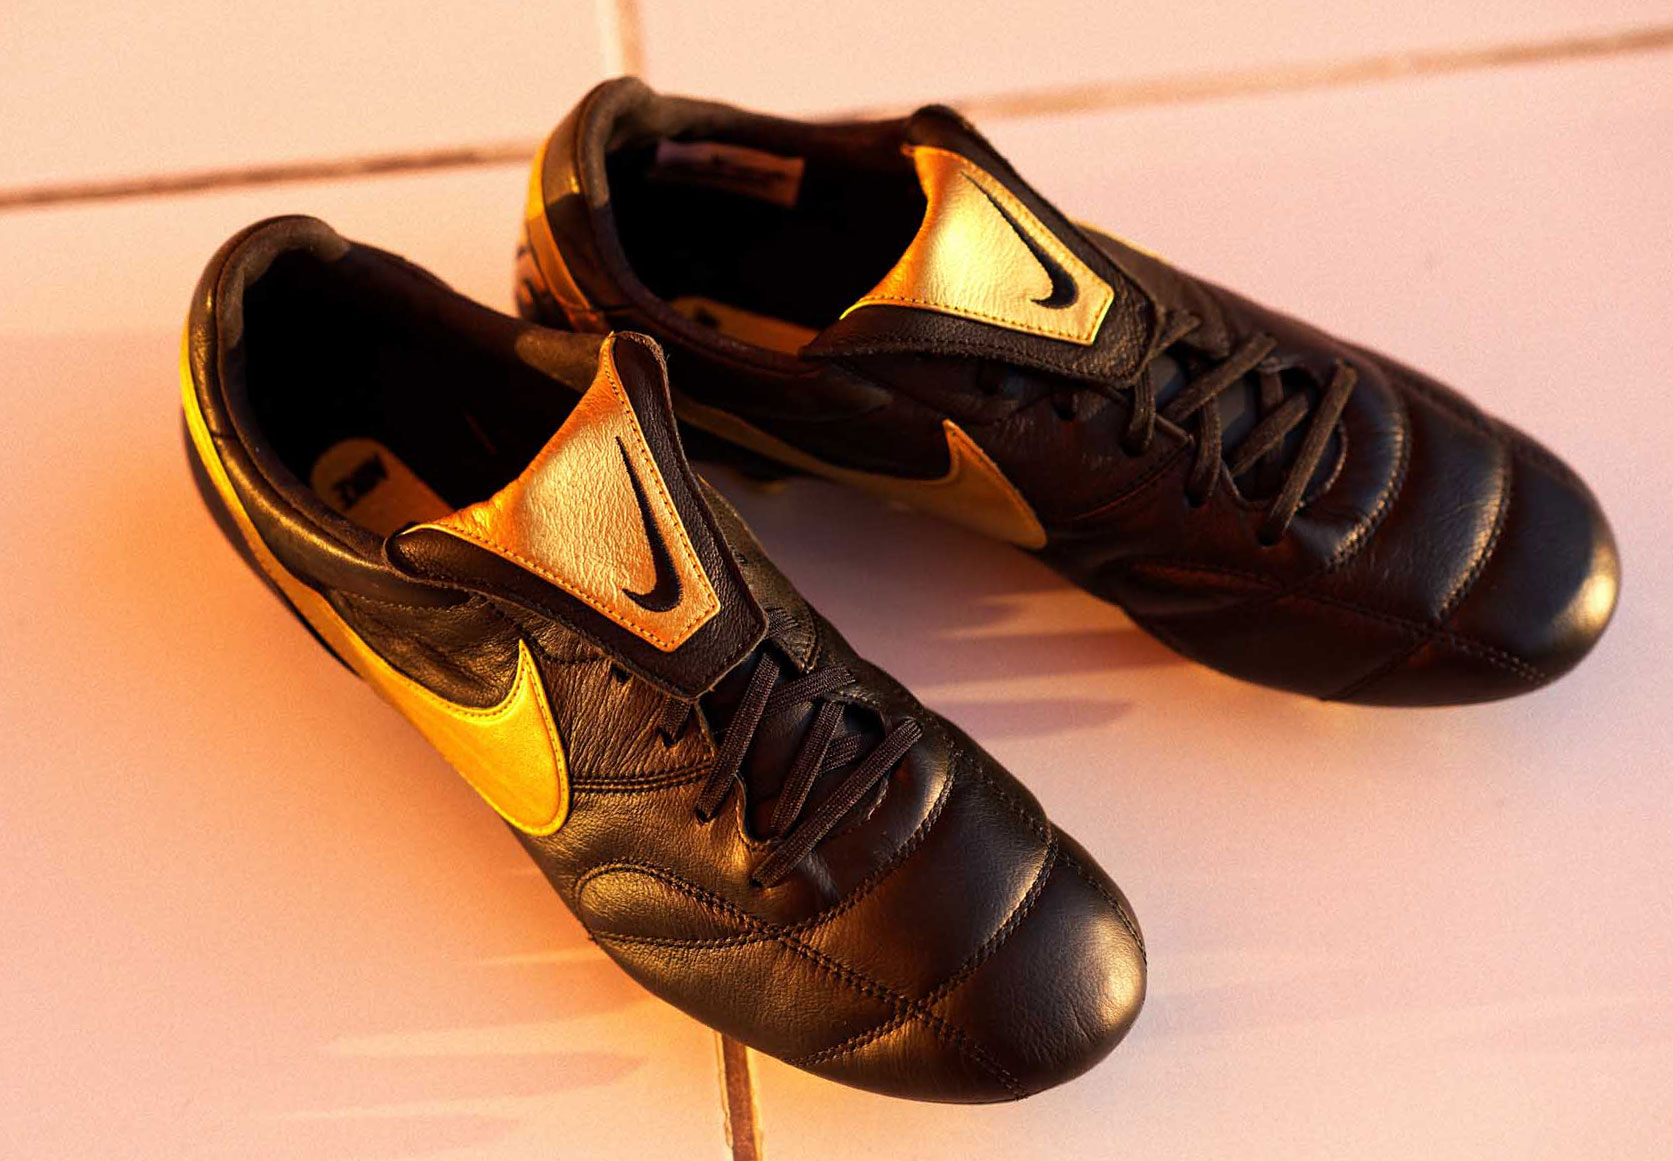 Nike презентуют бутсы модели Premier II в новой расцветке "Black/Gold"